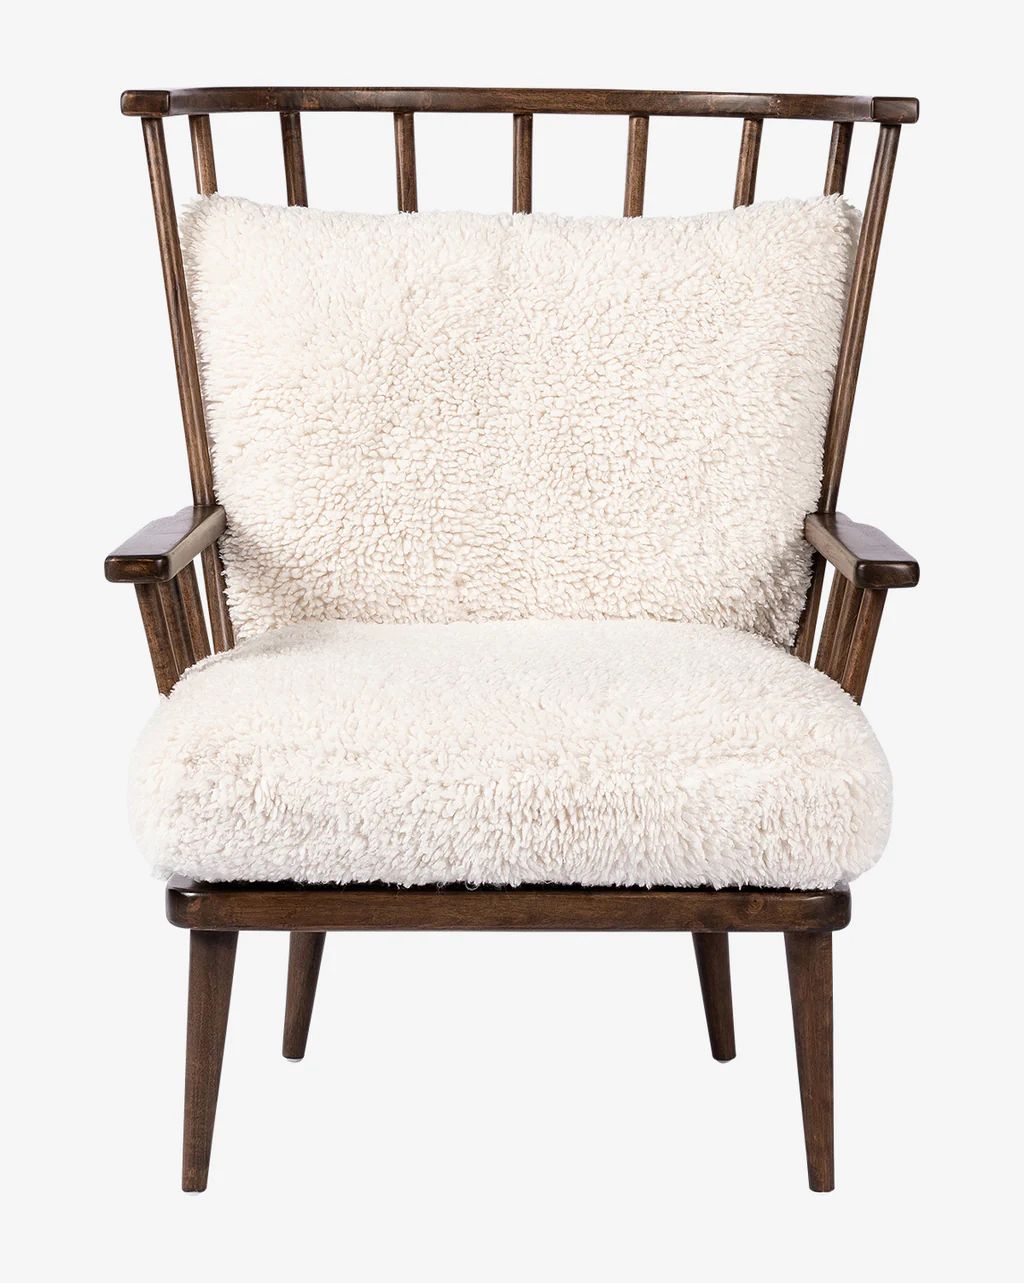 Carlin Lounge Chair | McGee & Co.